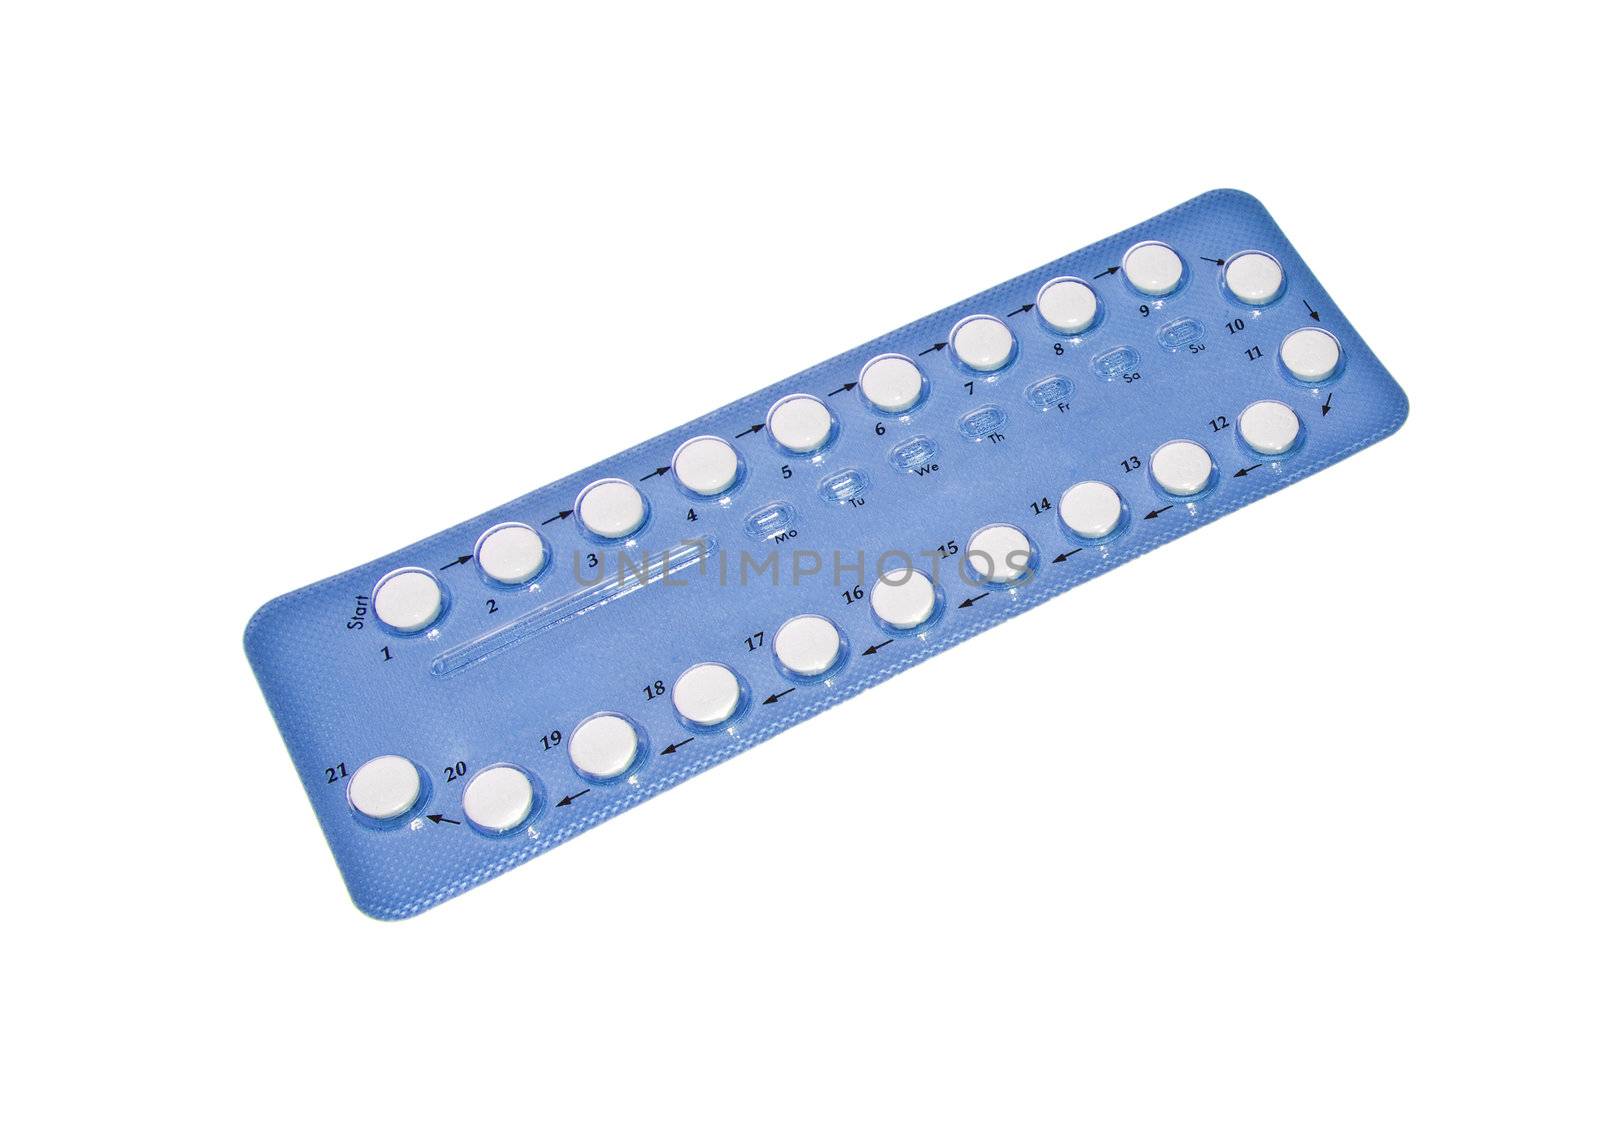 Birth Control Pills by ozaiachin